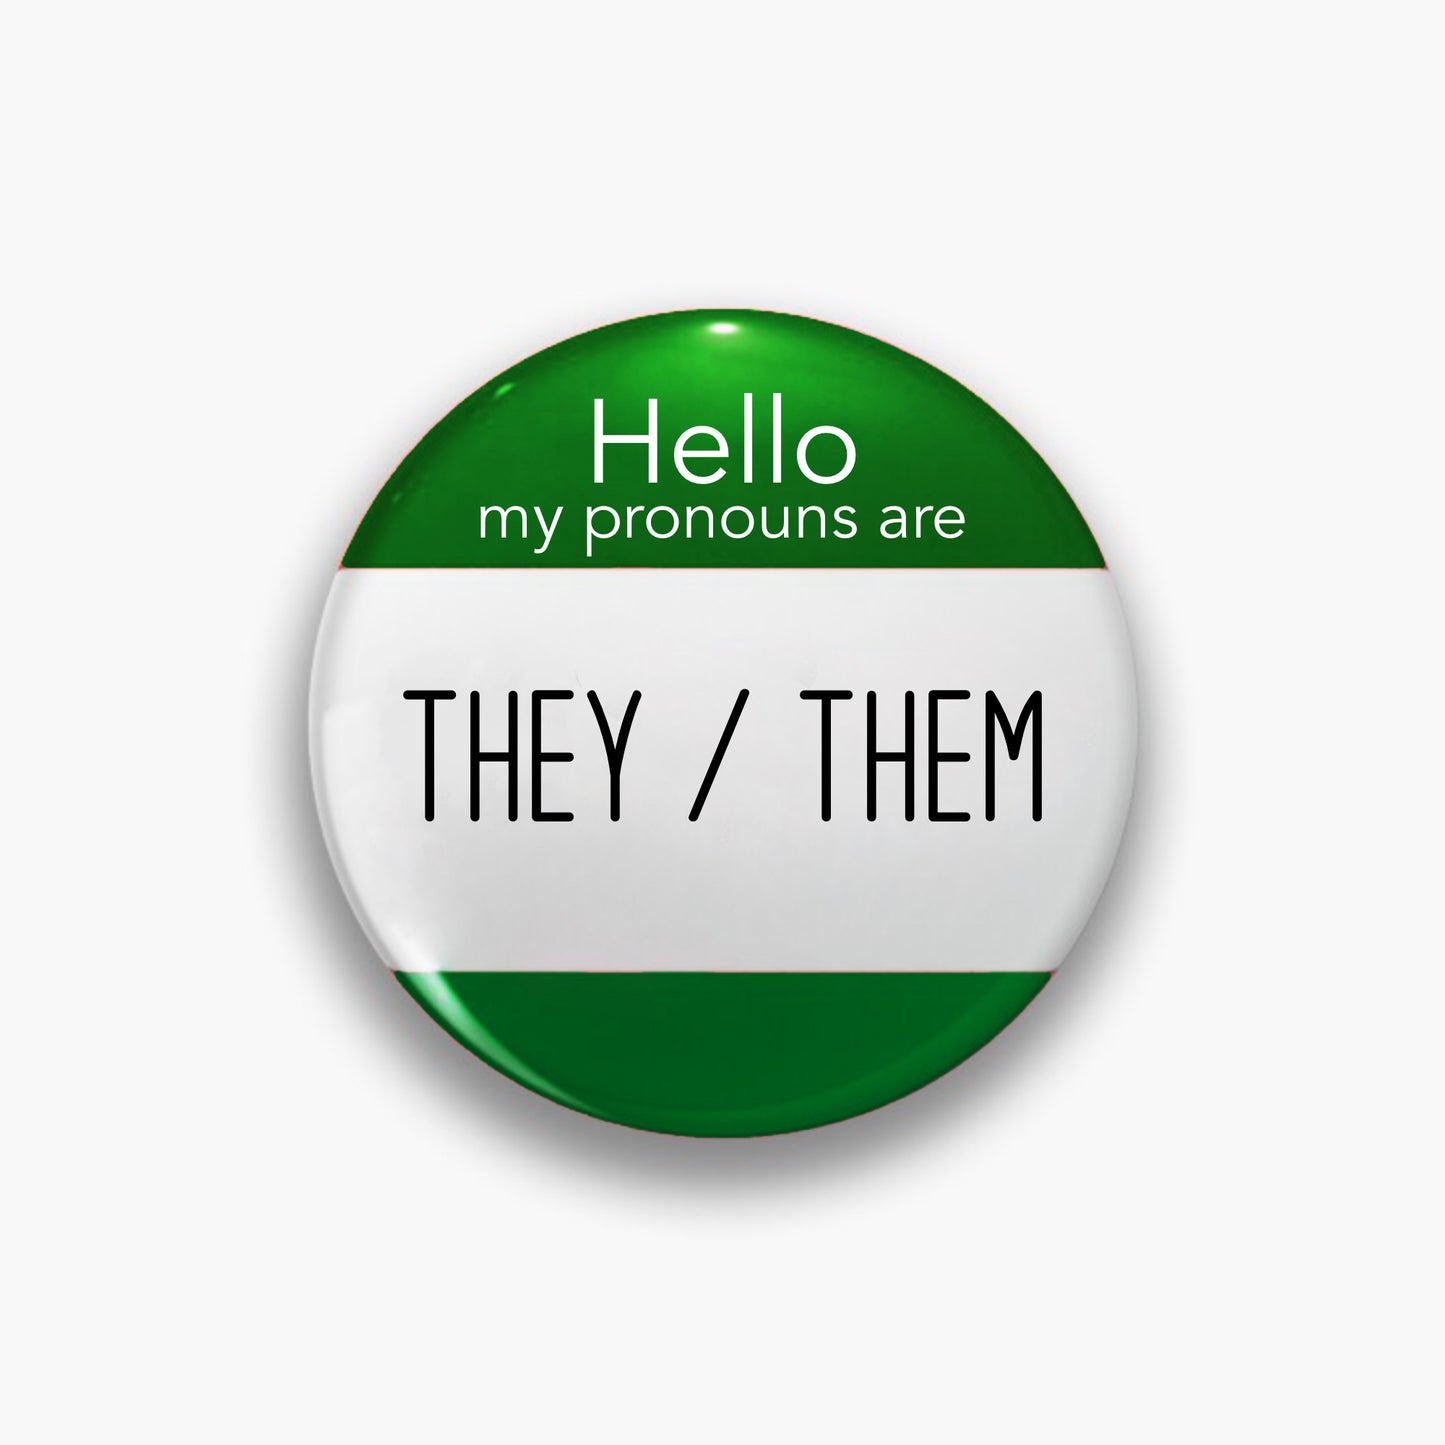 They/Them Personal Pronoun Pin Badge